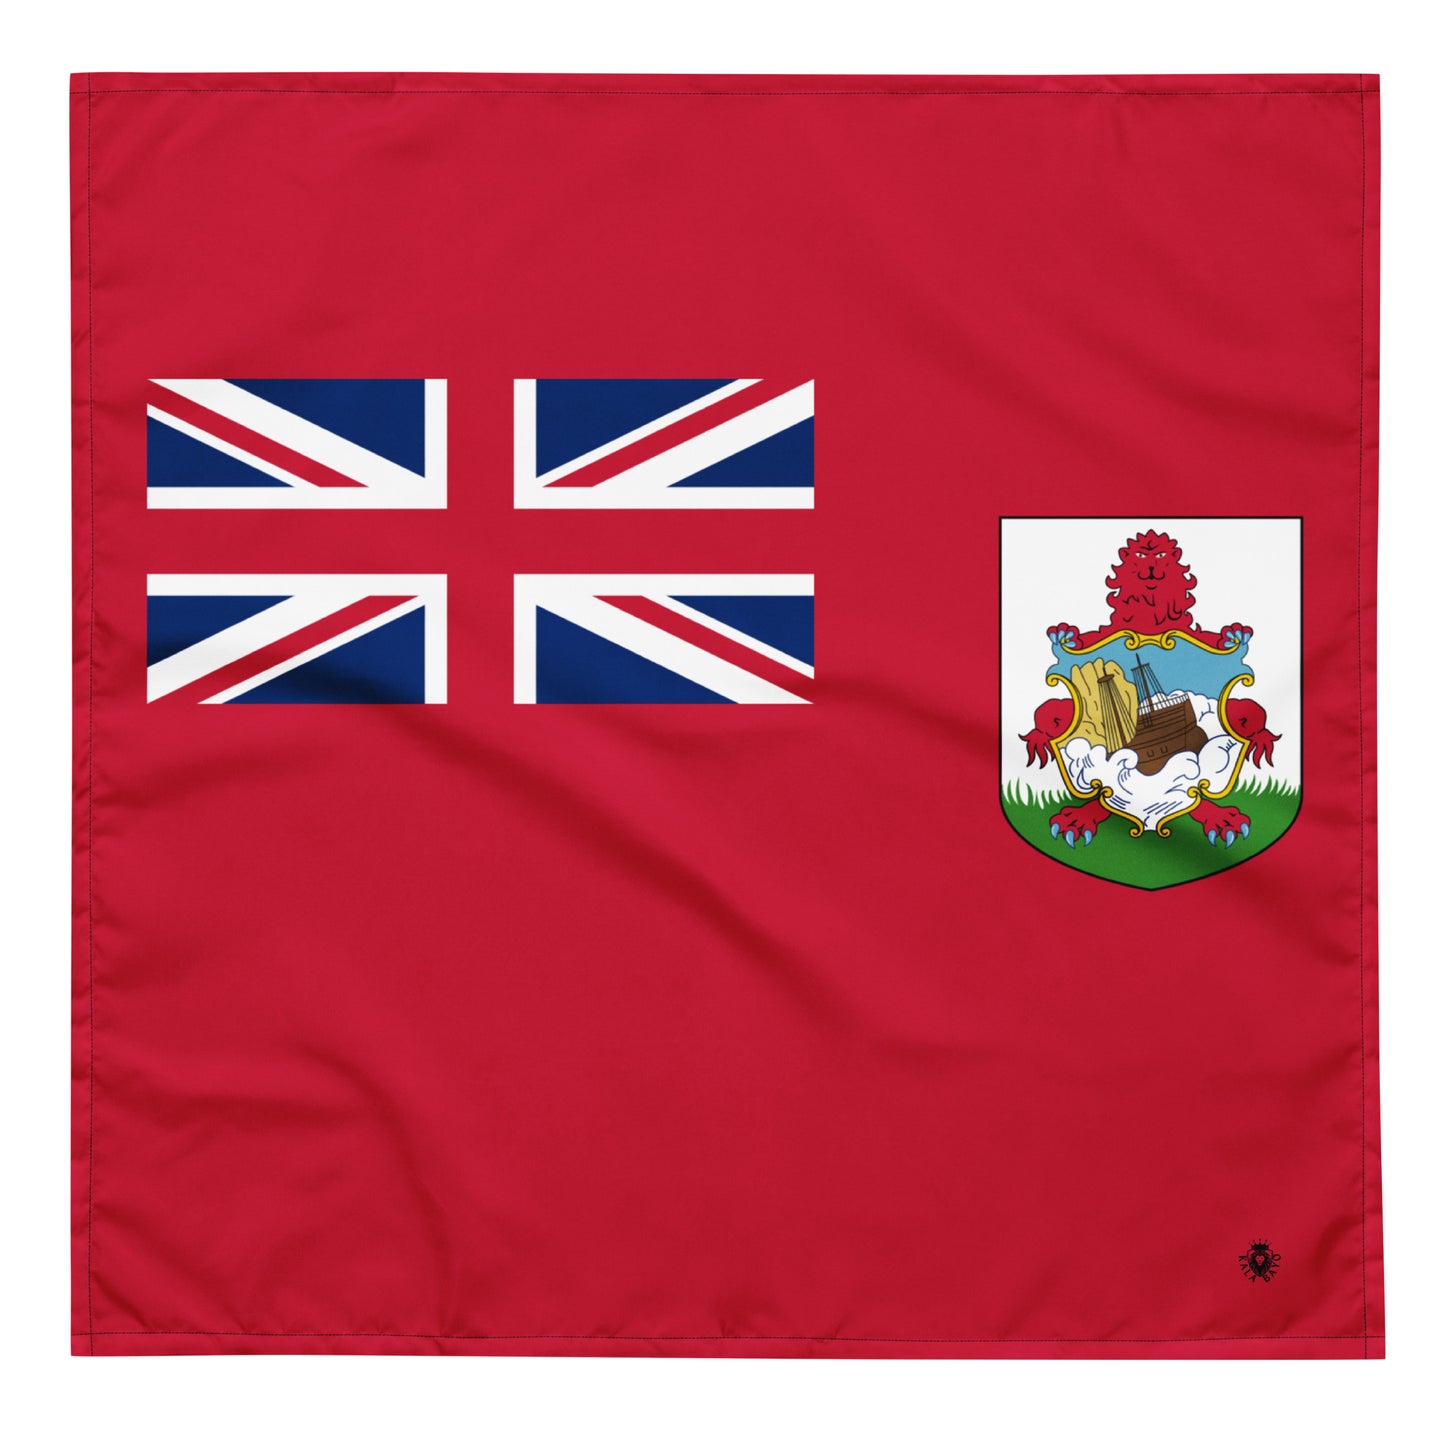 Bermuda Bandana